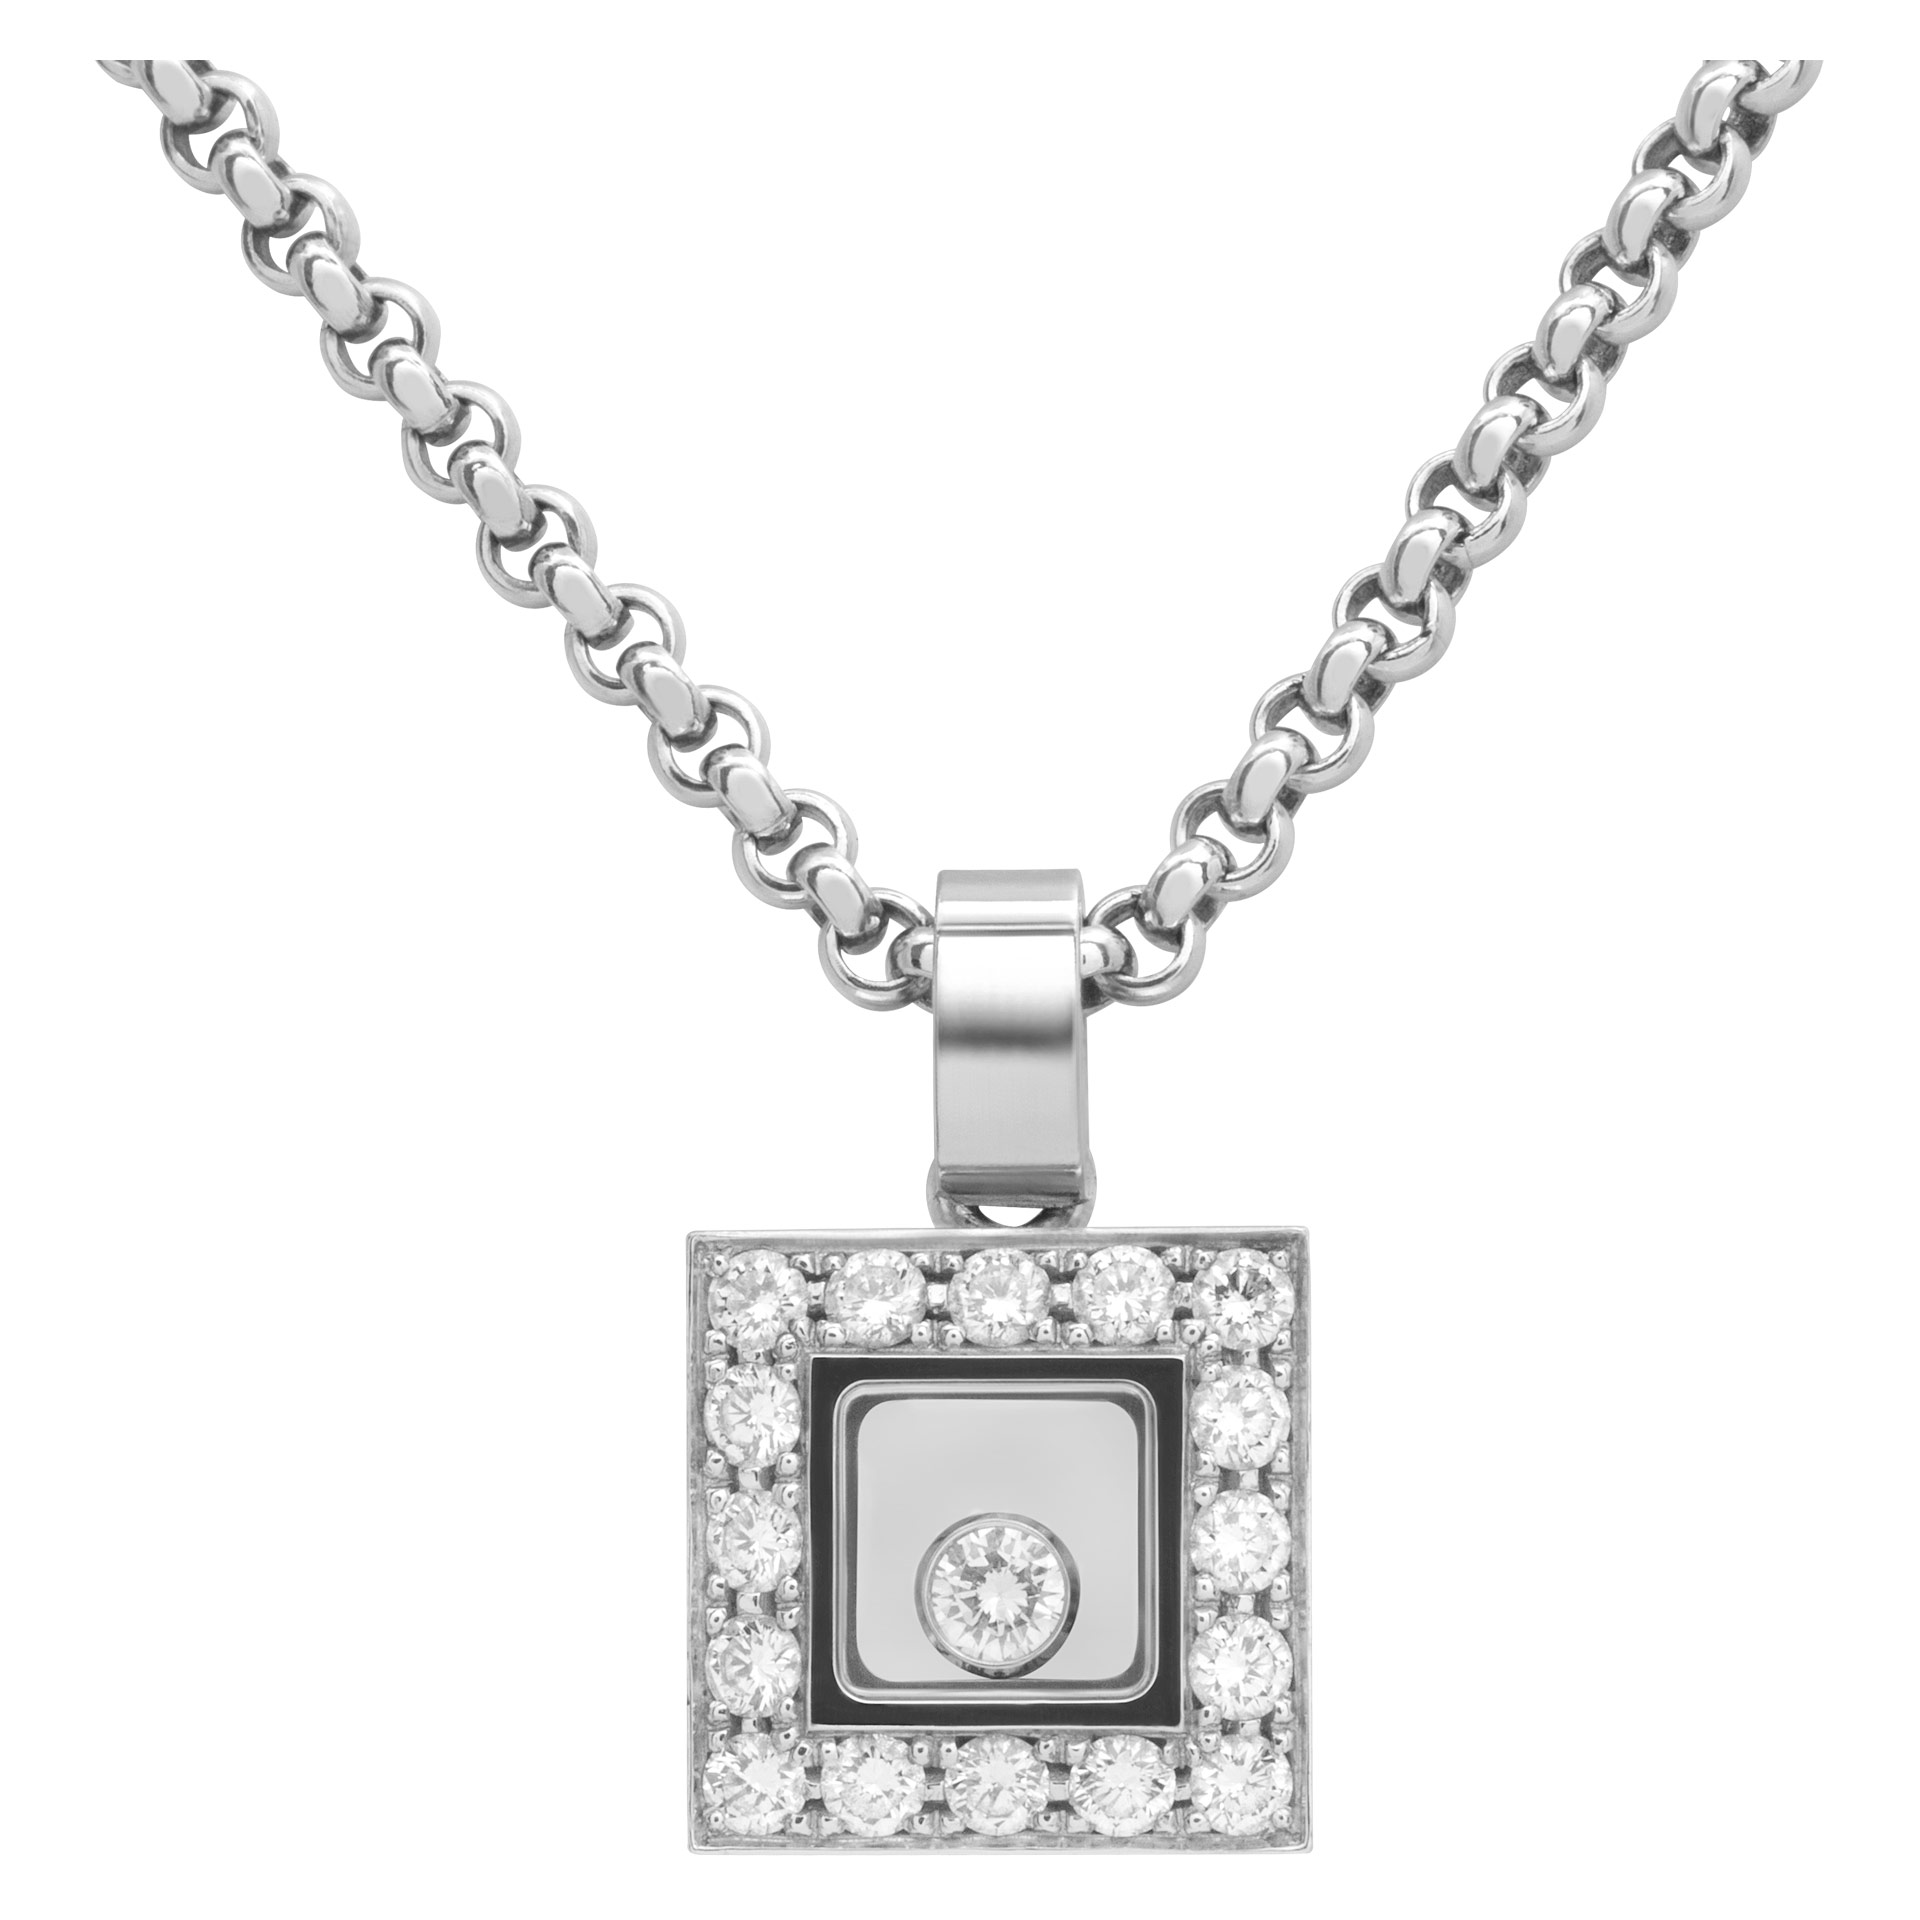 Chopard Happy diamond icons necklace 18k white gold square pendant